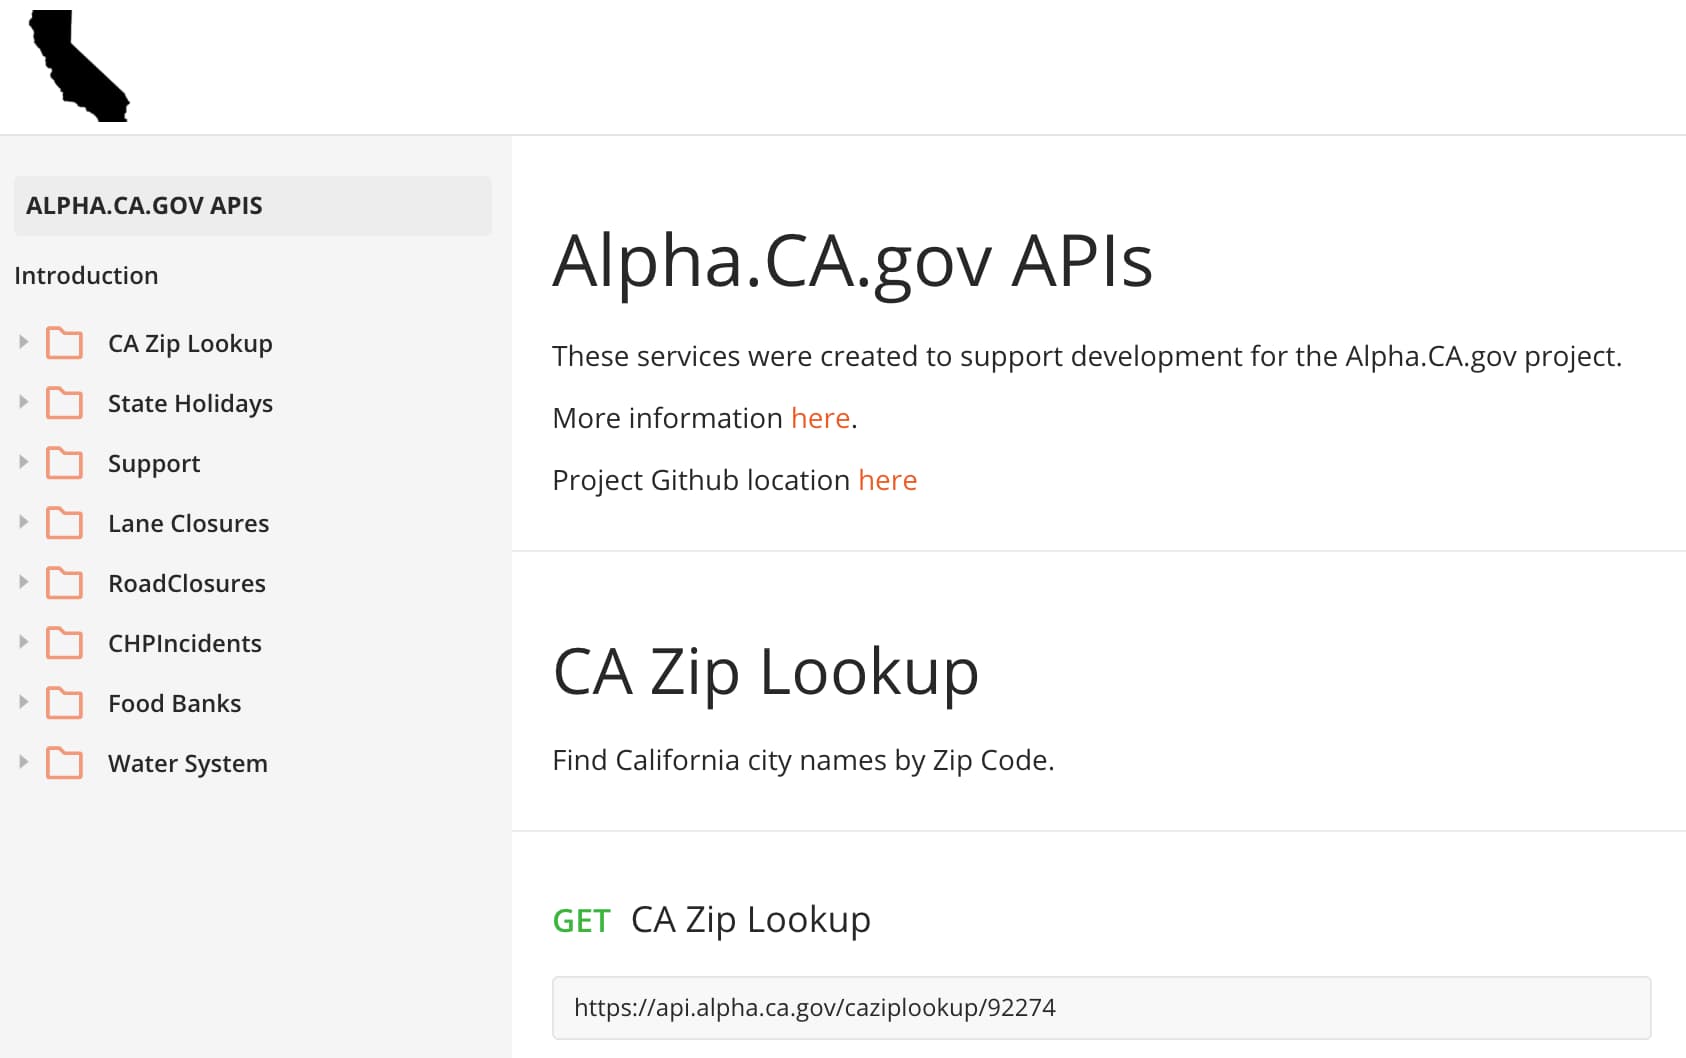 Why Alpha.CA.gov is prioritizing APIs